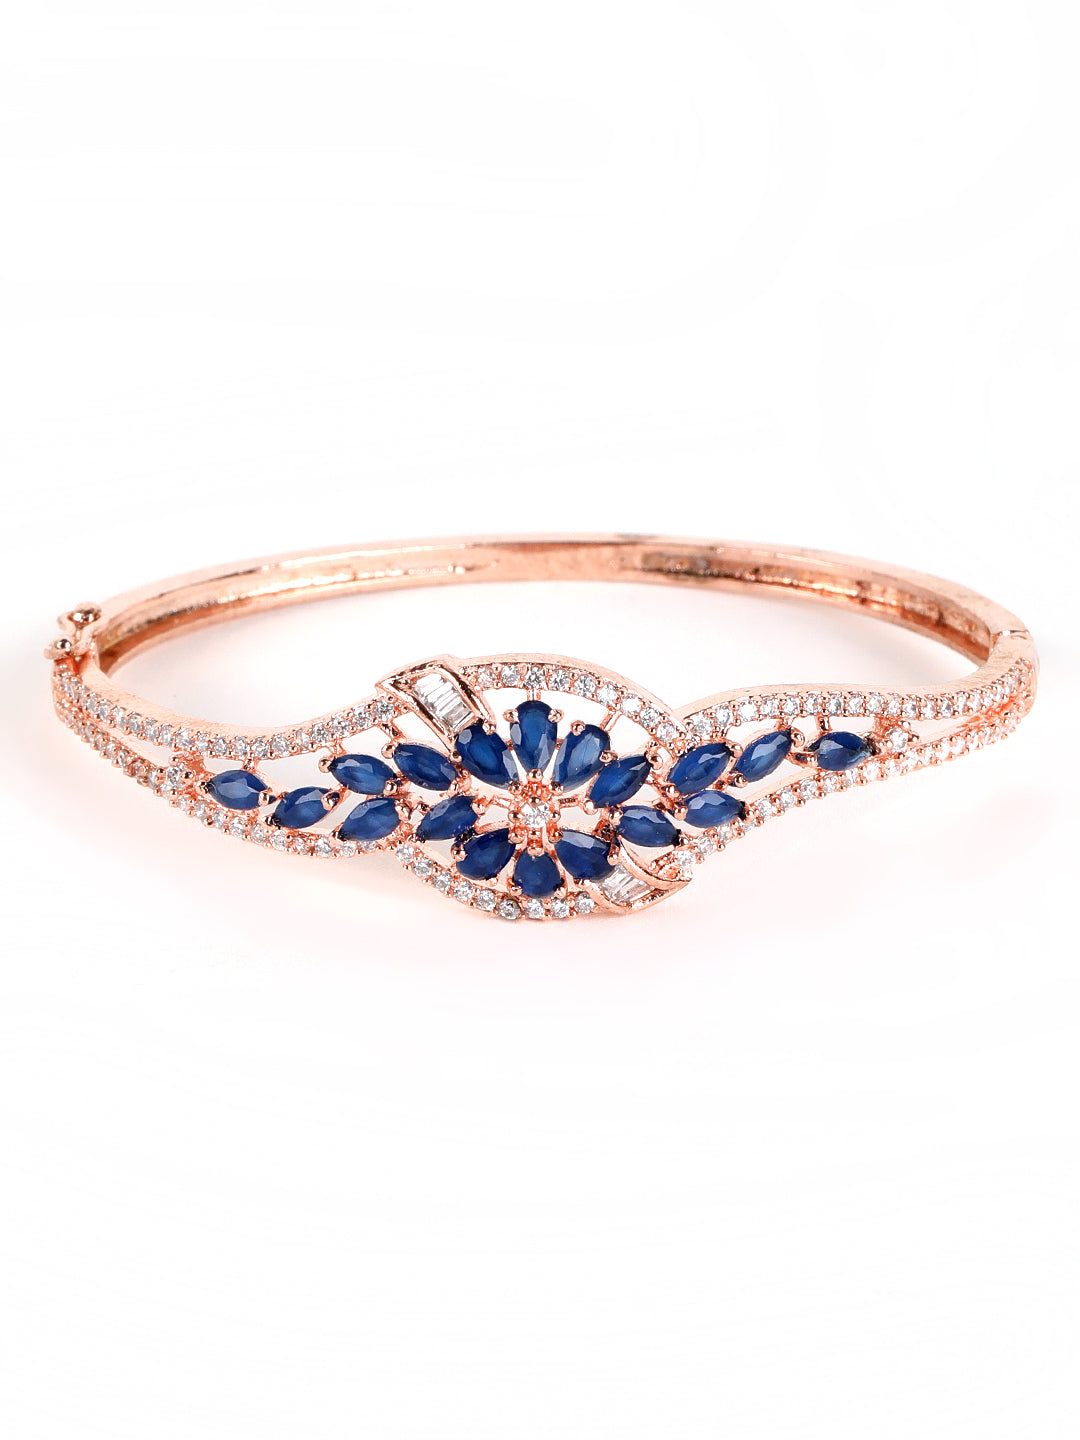 Blue Silver-Plated American Diamond Studded, Floral Patterned Bracelet